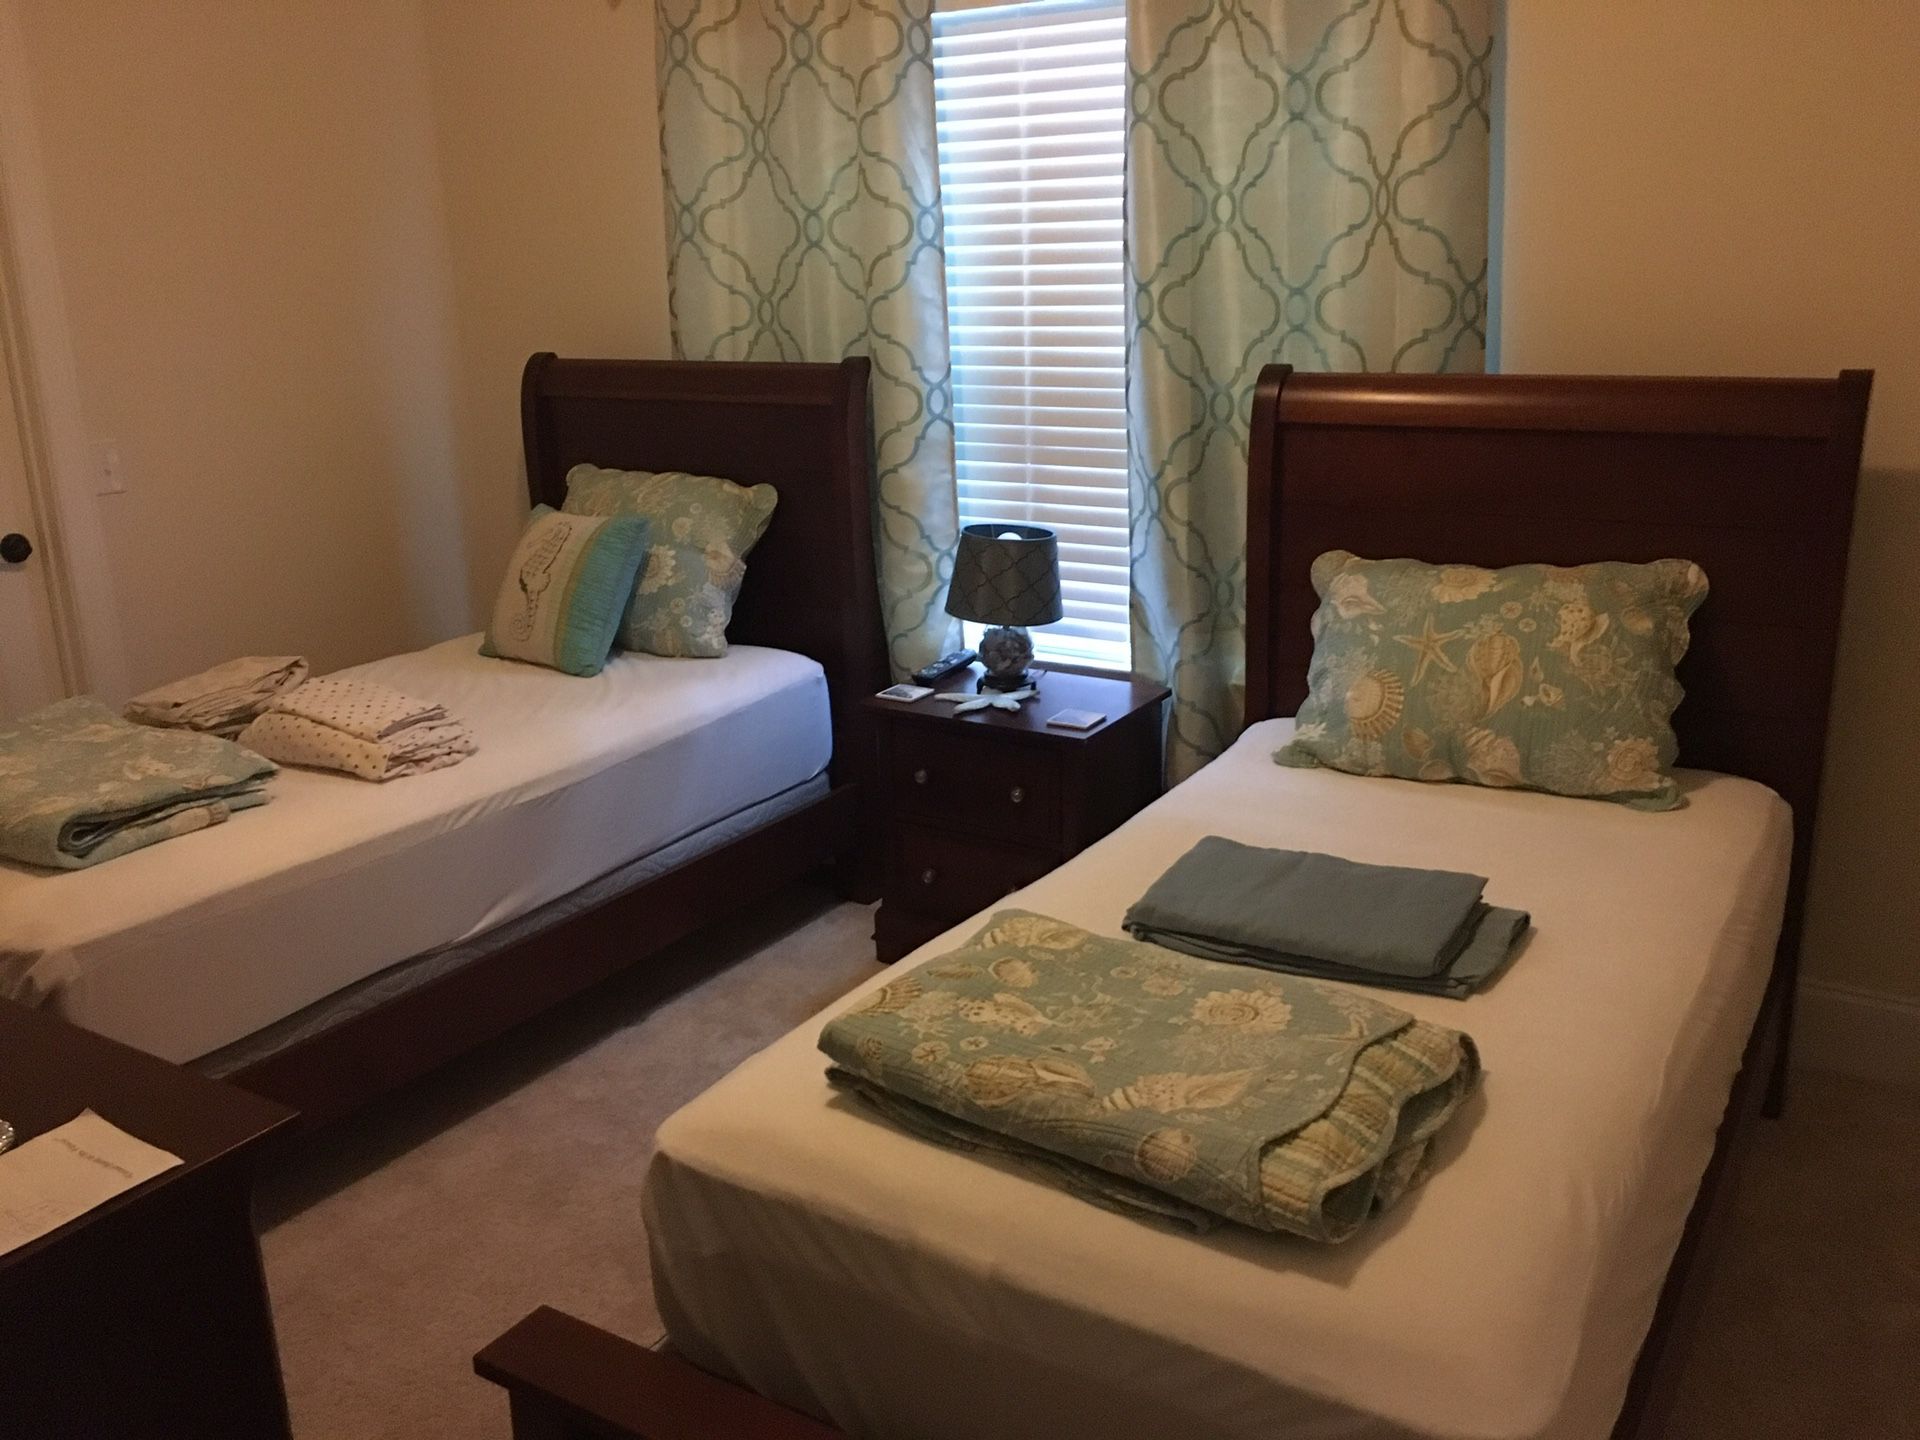 Bedroom Suite (Grand Home Furnishings)